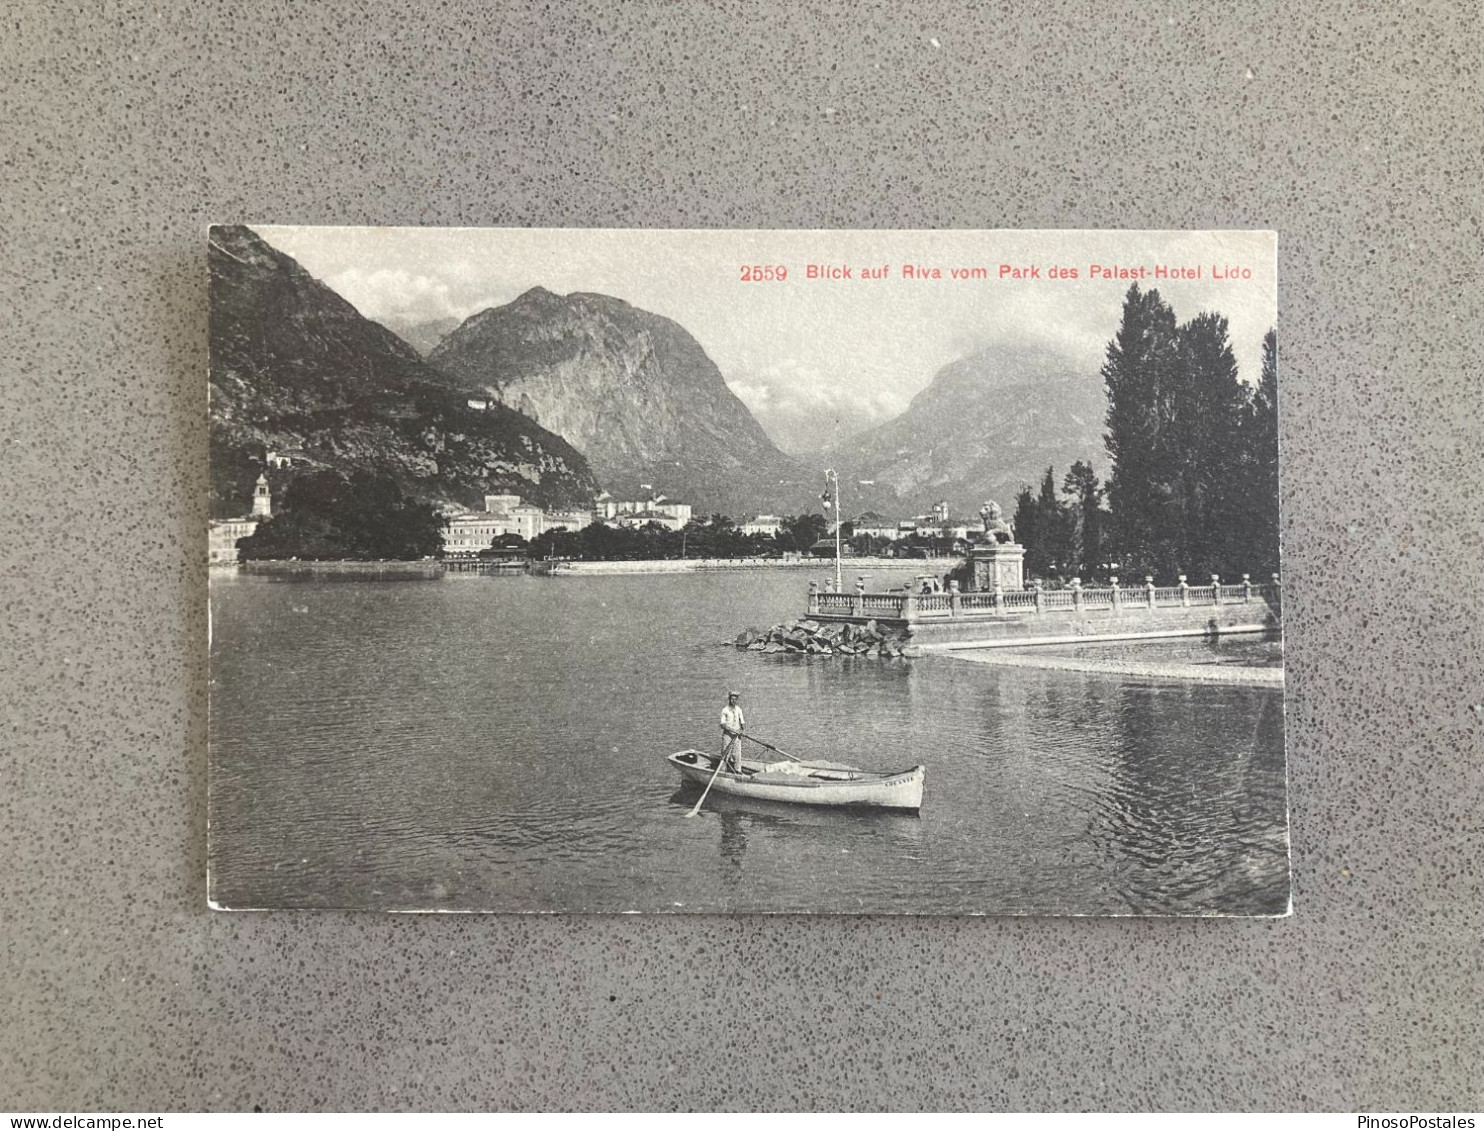 Blick Auf Riva Vom Park Des Palast-Hotel Lido Carte Postale Postcard - Verona